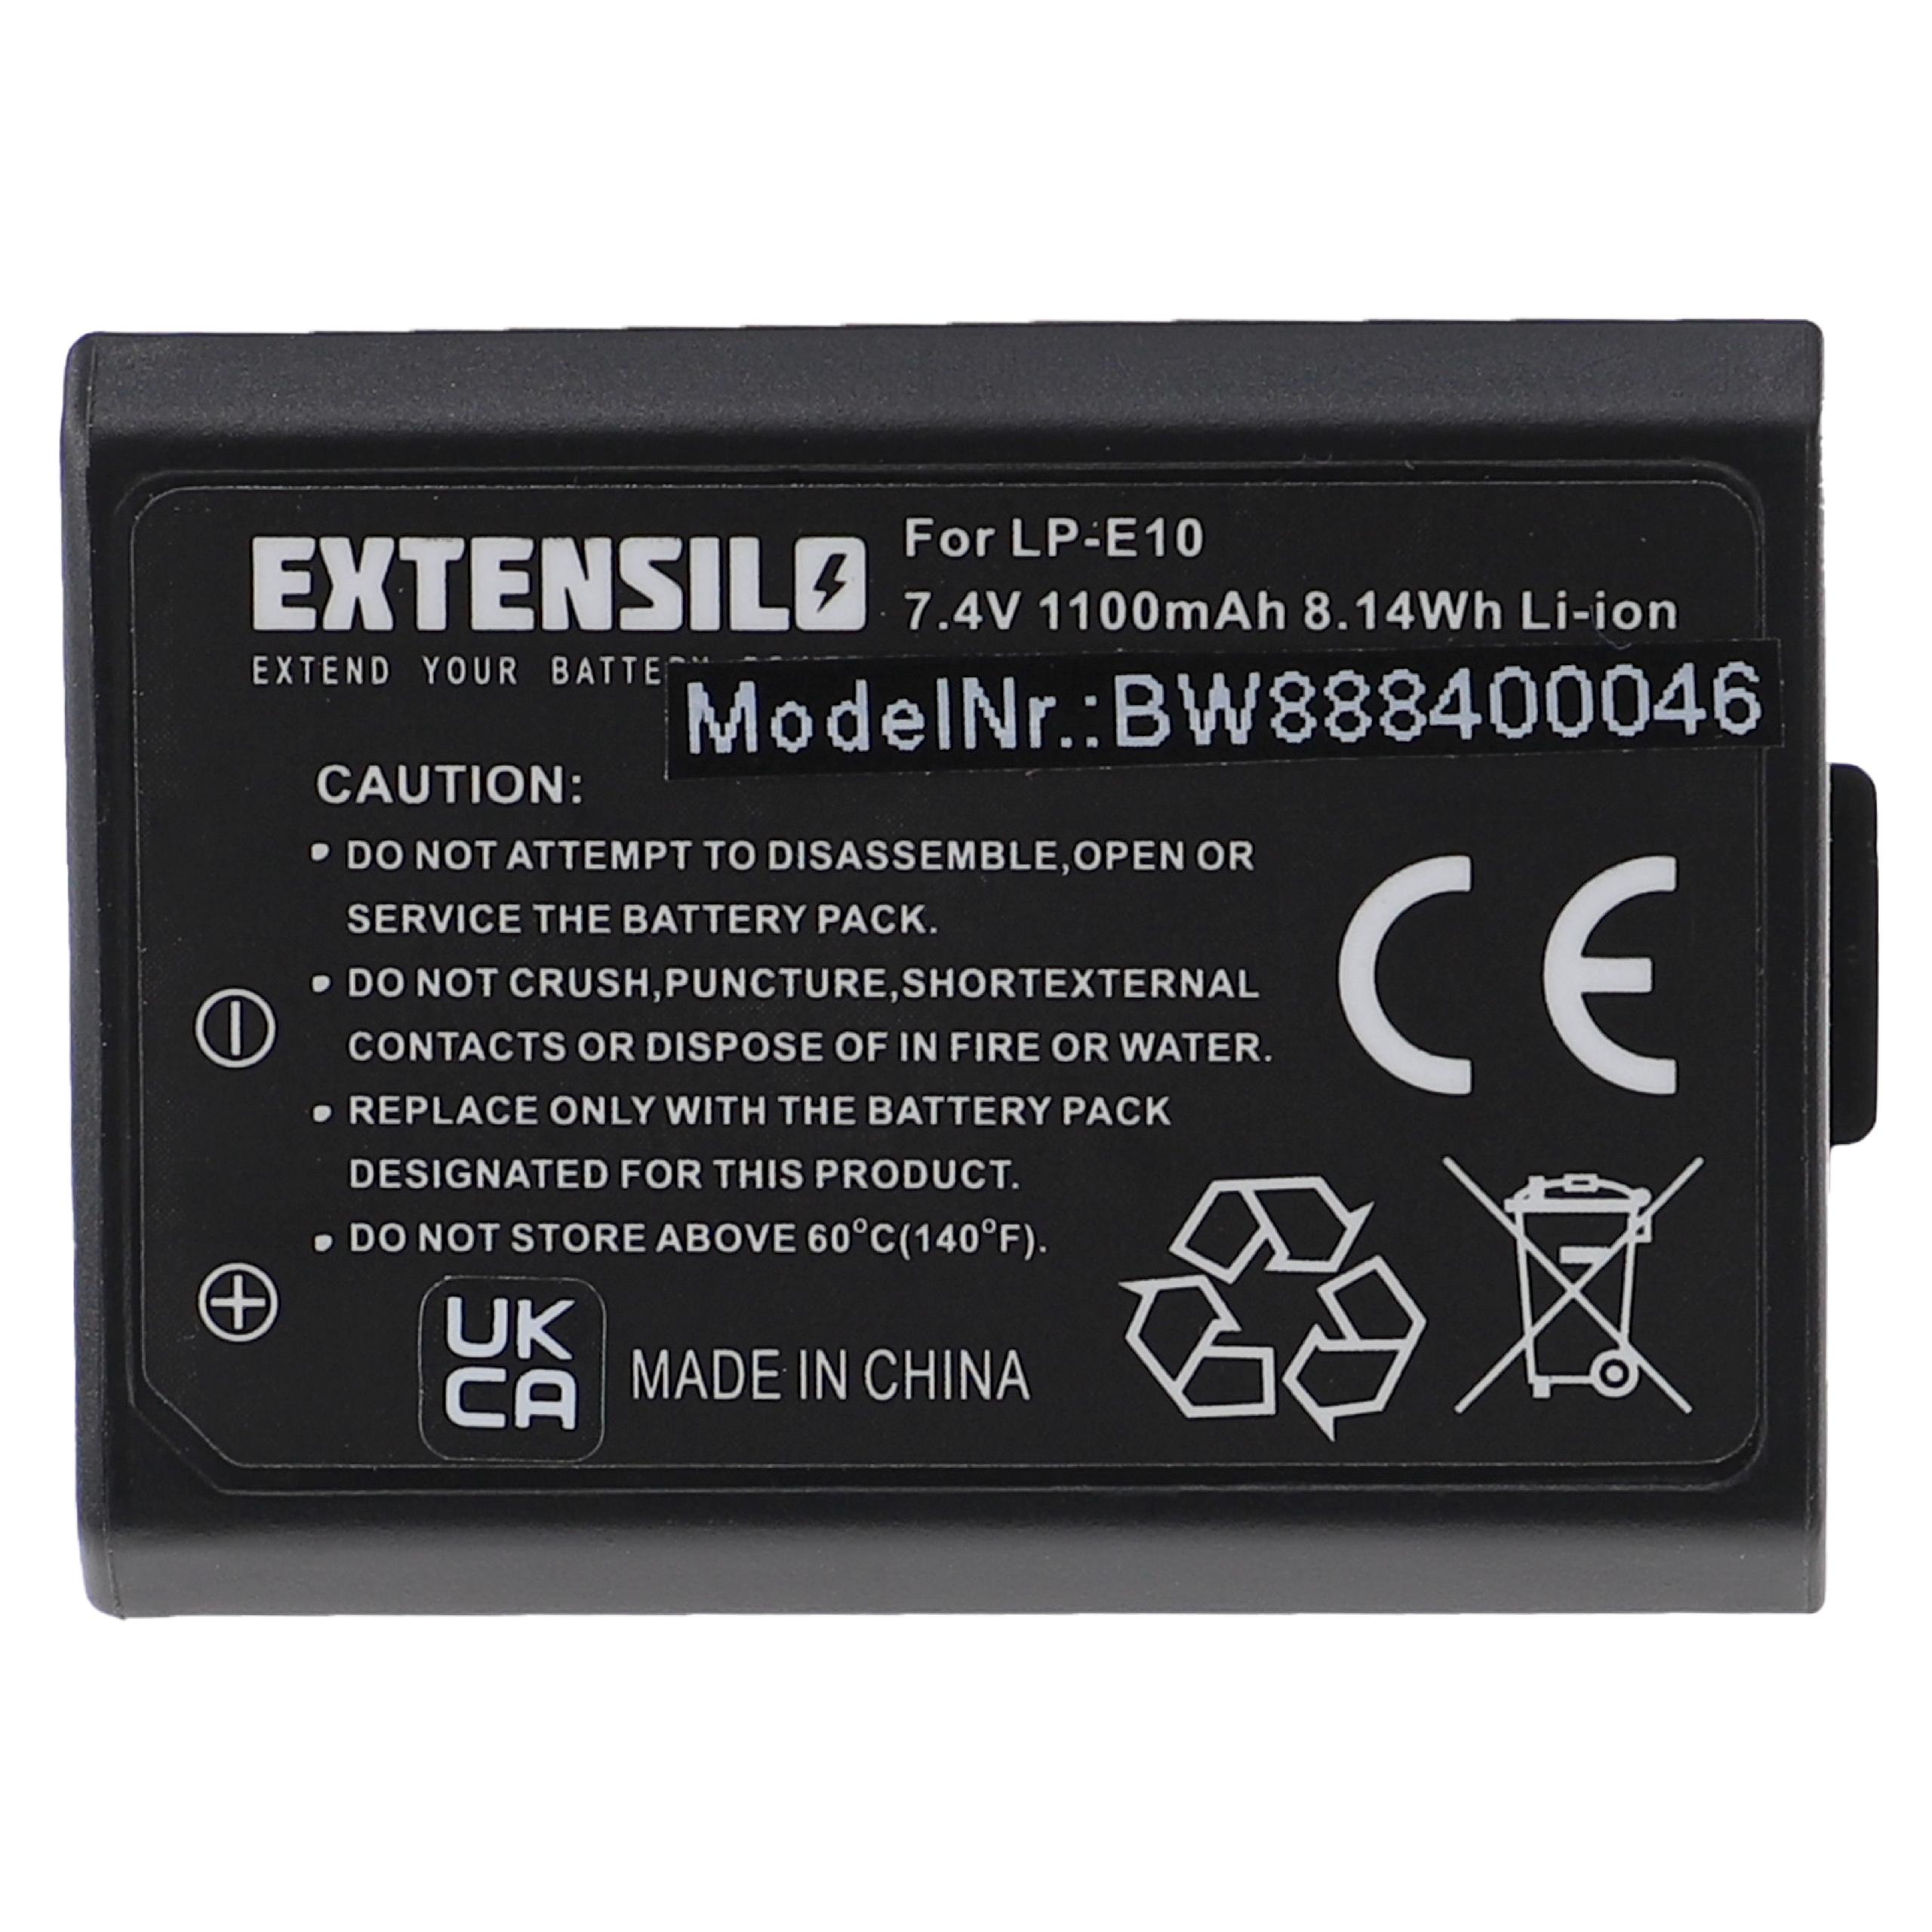 Battery Replacement for Canon LP-E10 - 1100mAh, 7.4V, Li-Ion